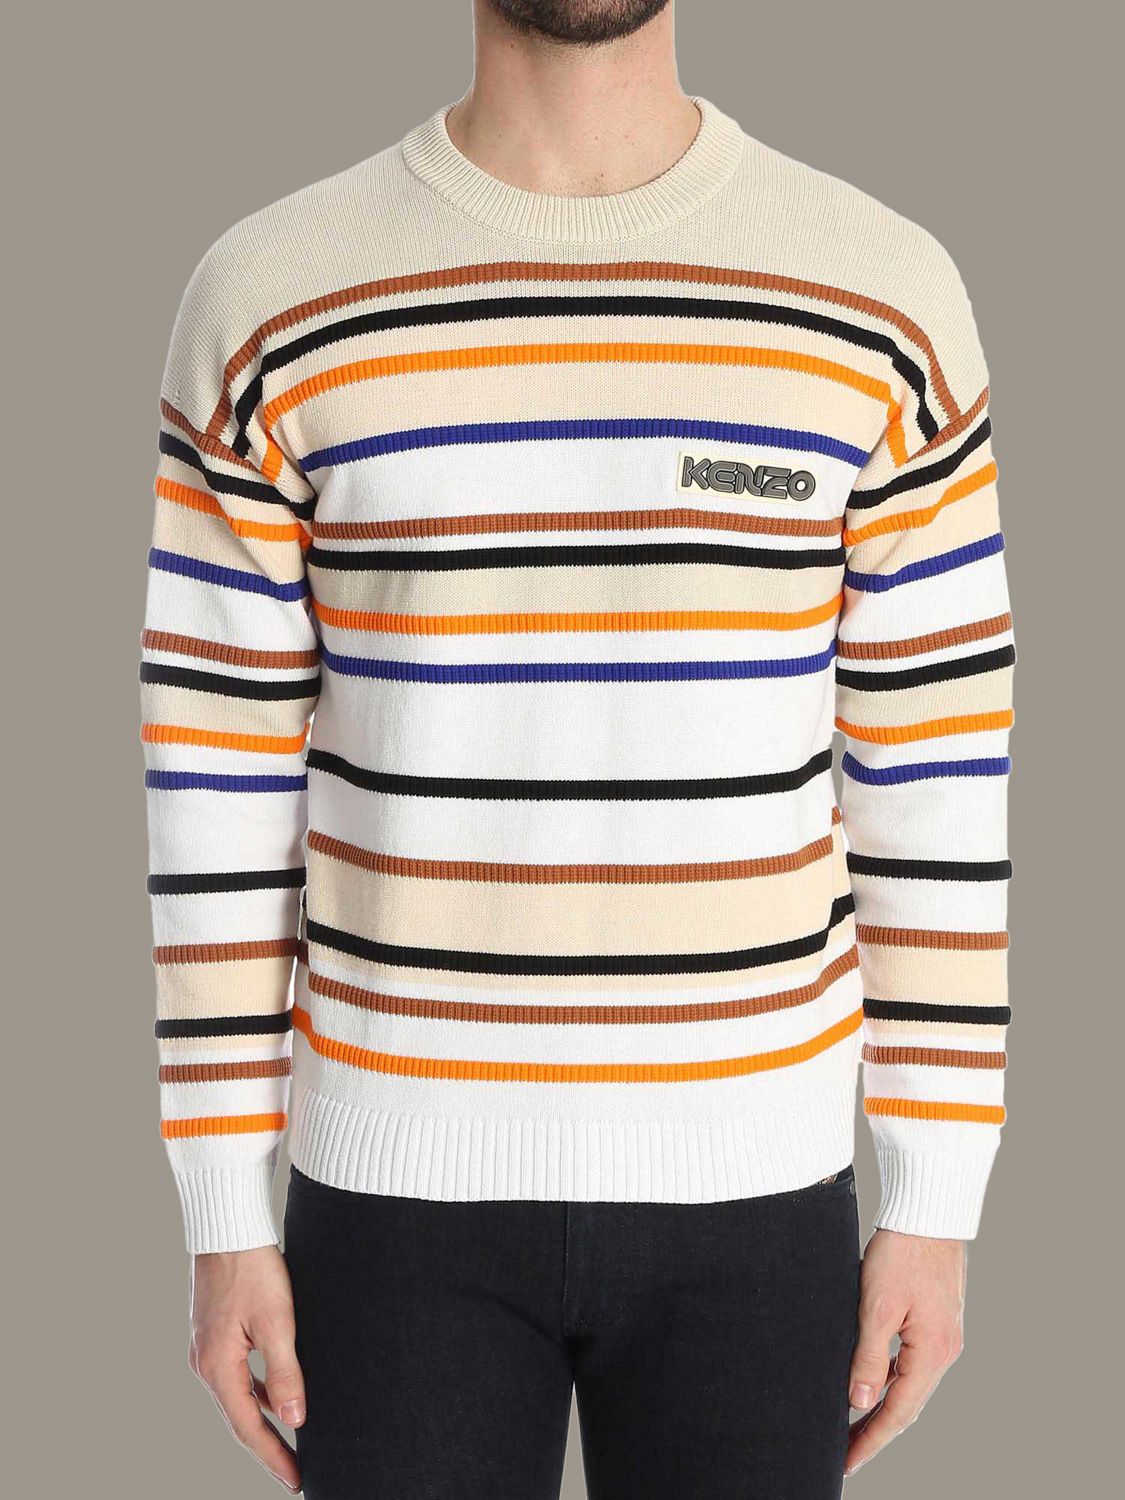 kenzo striped sweater